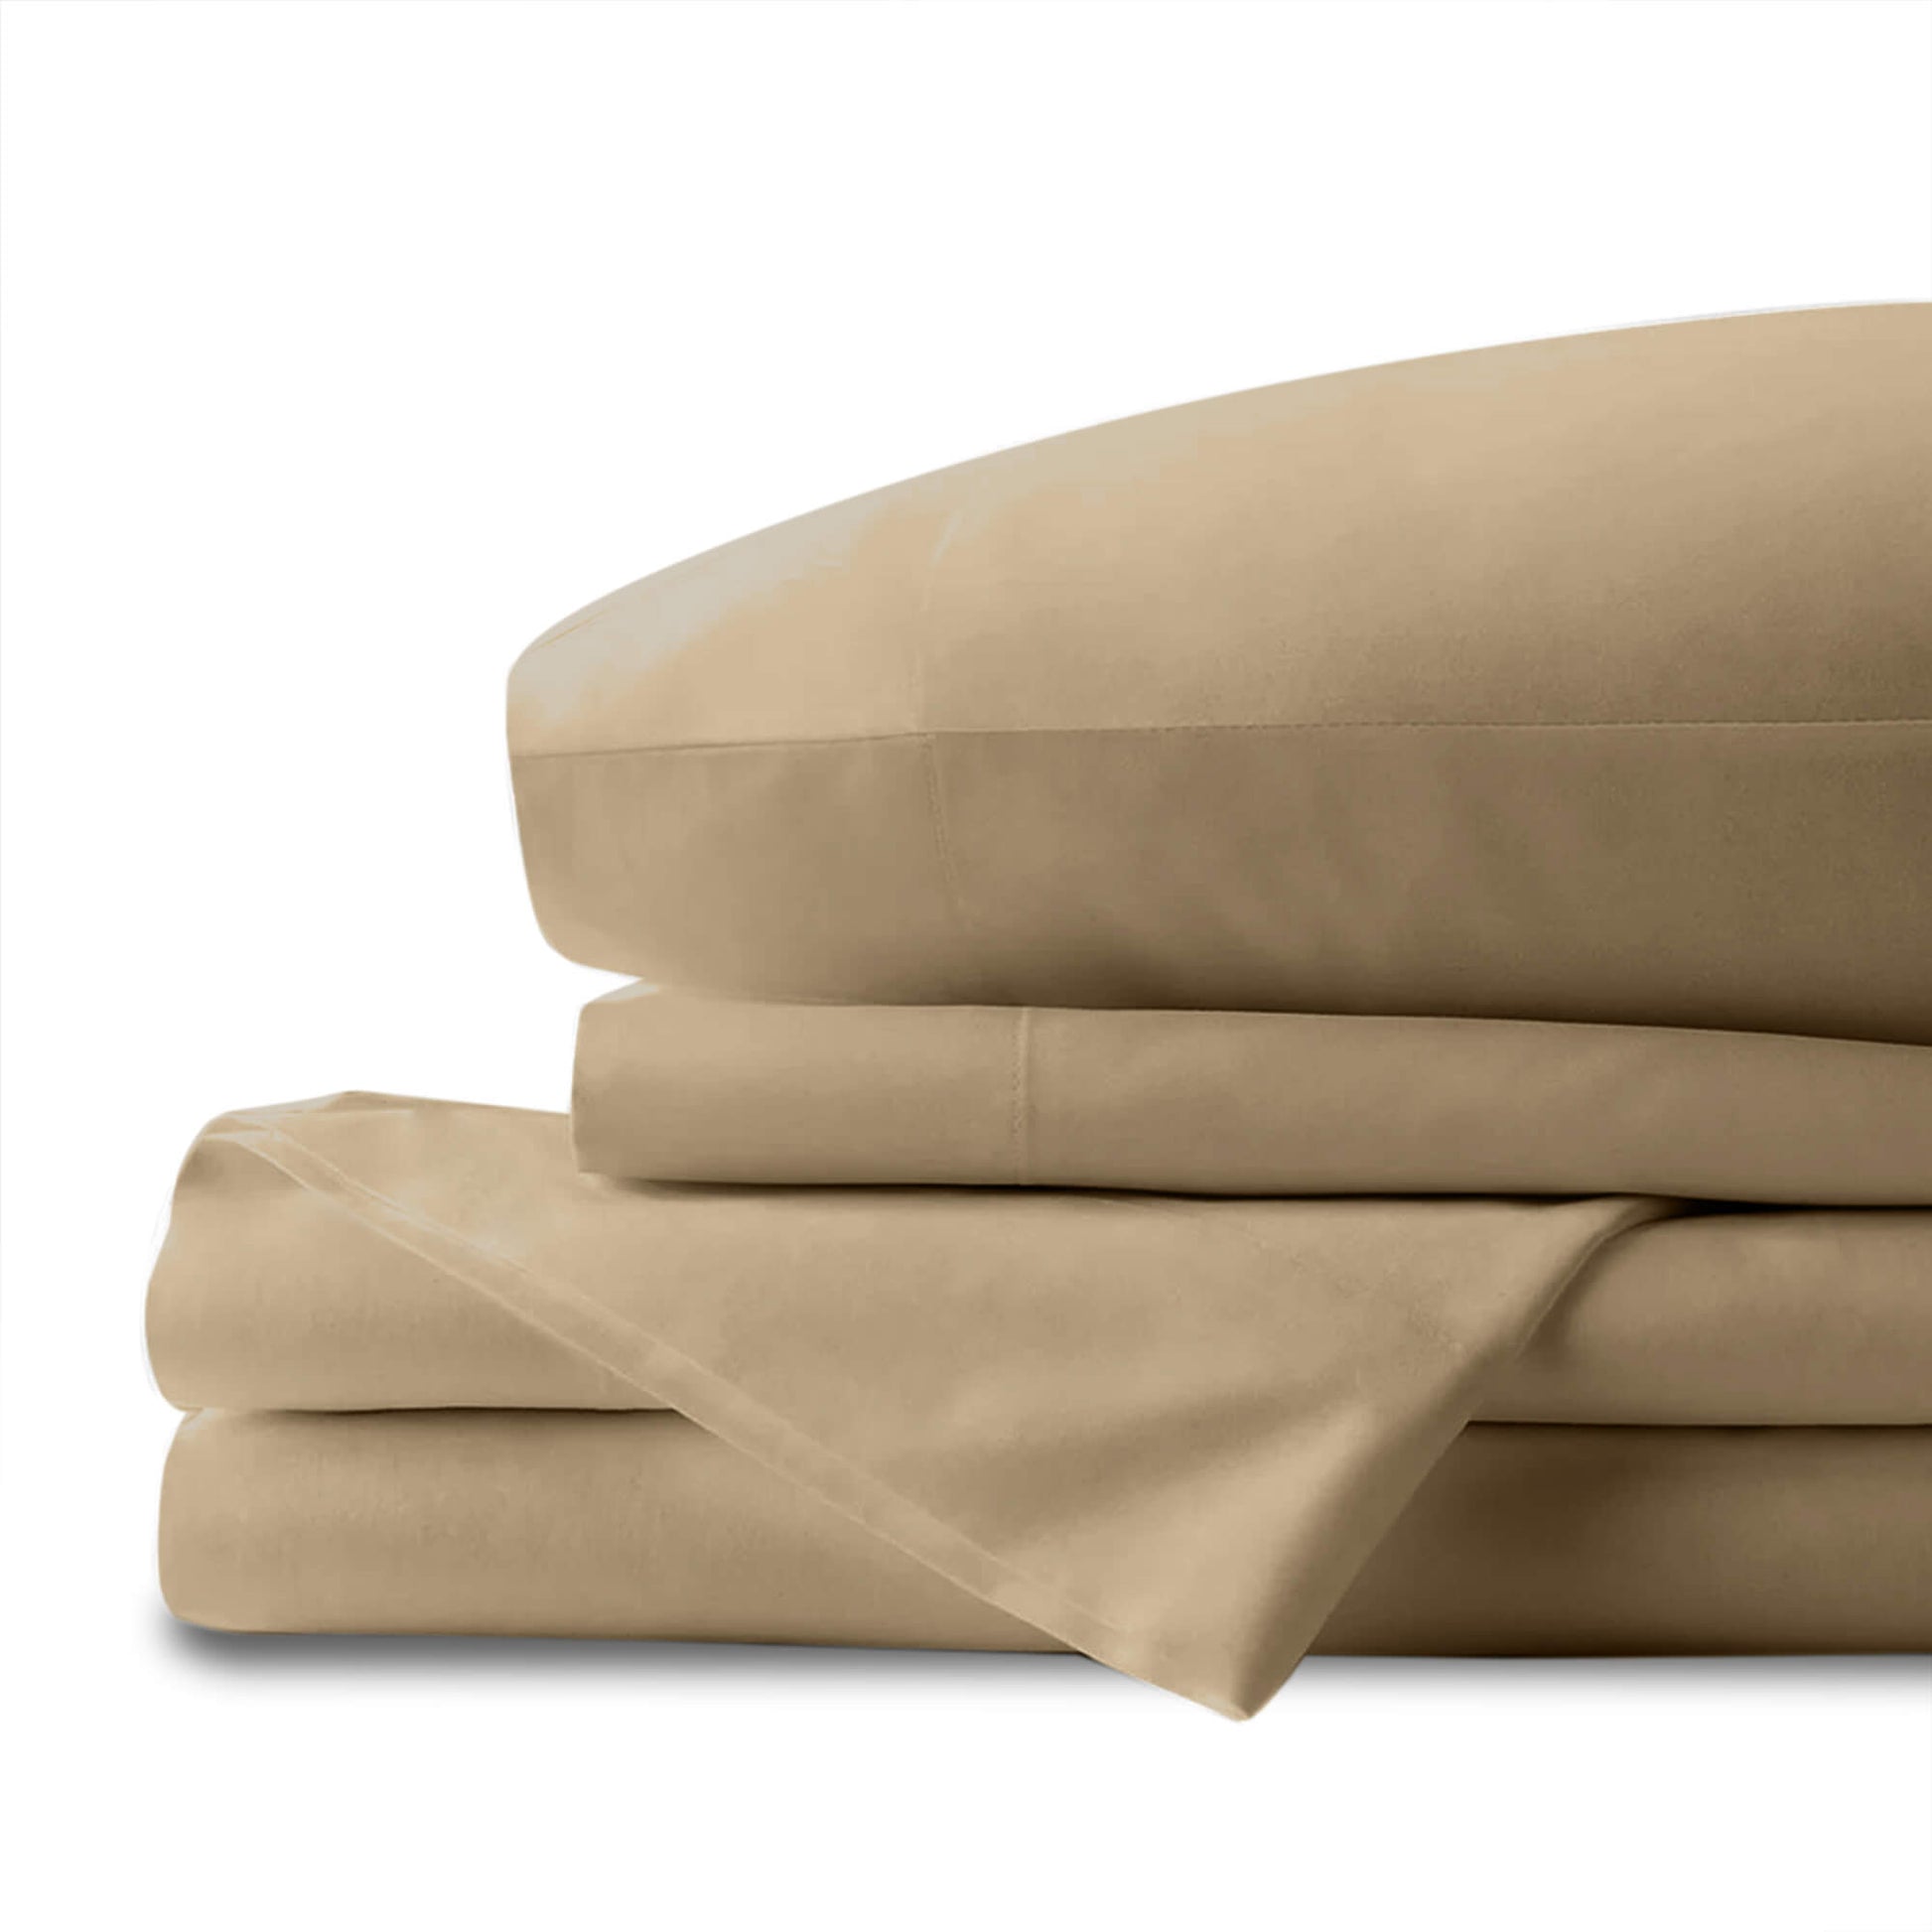 Delilah Home 100% Organic Cotton Bed Sheets
Jungle Pillows